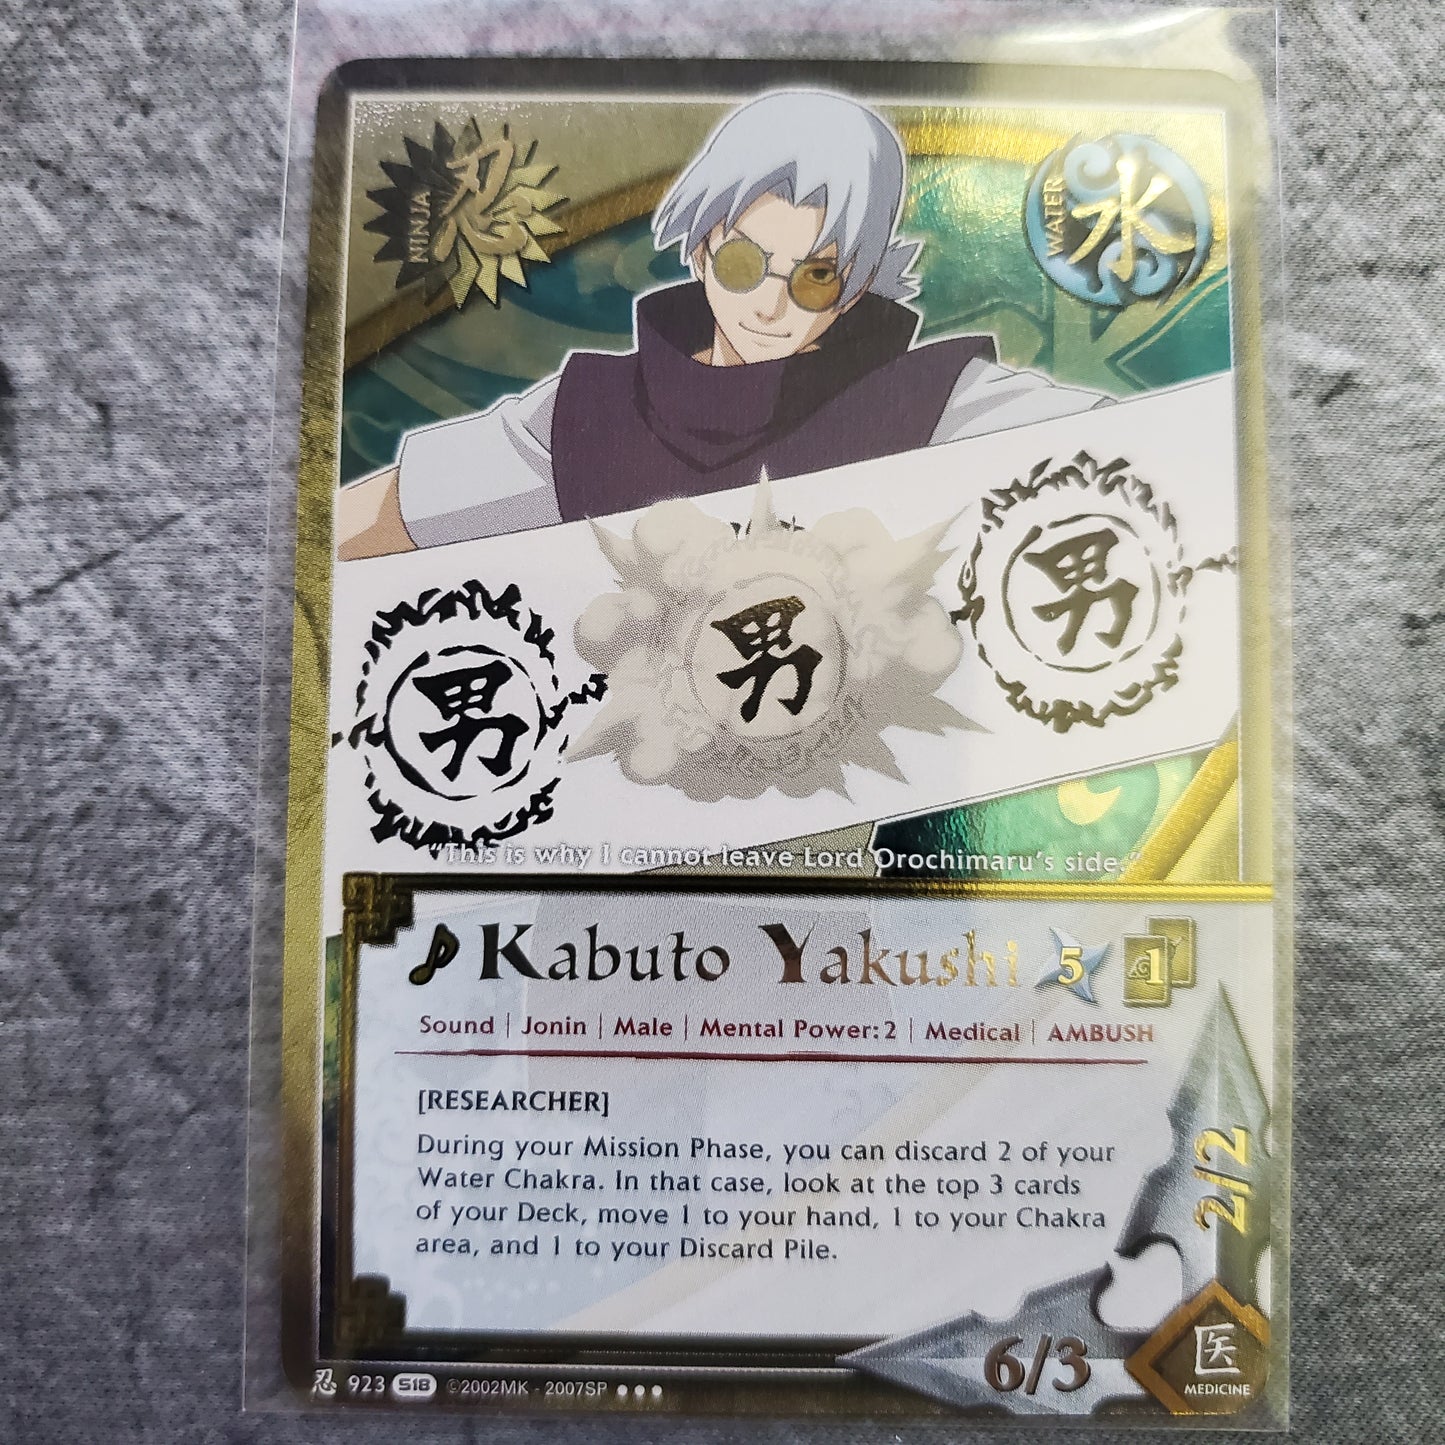 Kabuto YAKUSHI